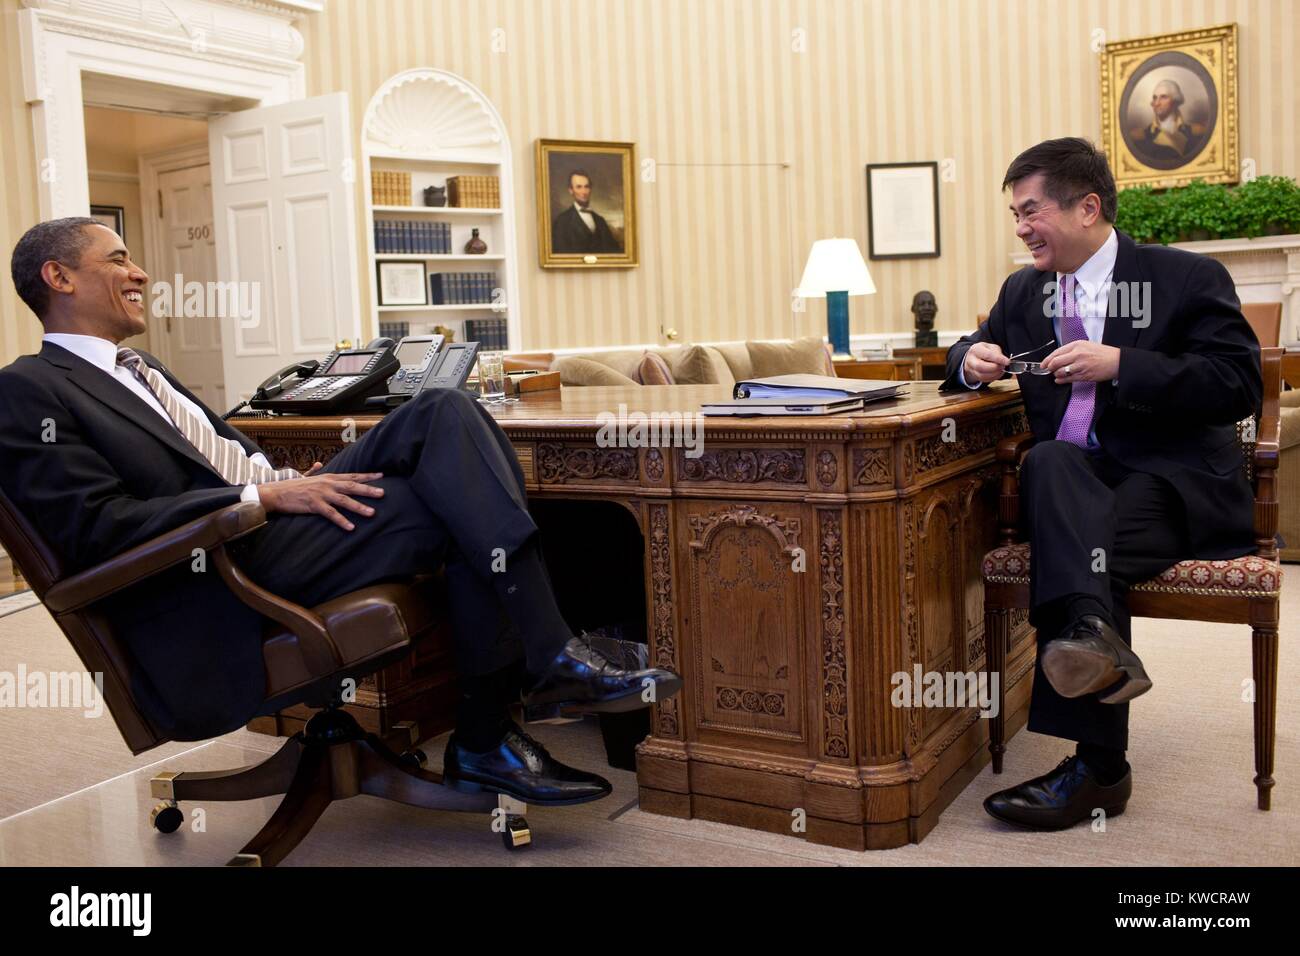 Präsident Barack Obama trifft sich mit Gary Locke, US-Botschafter in China. Oval Office, 17. Januar 2012. (BSLOC 2015 3 154) Stockfoto